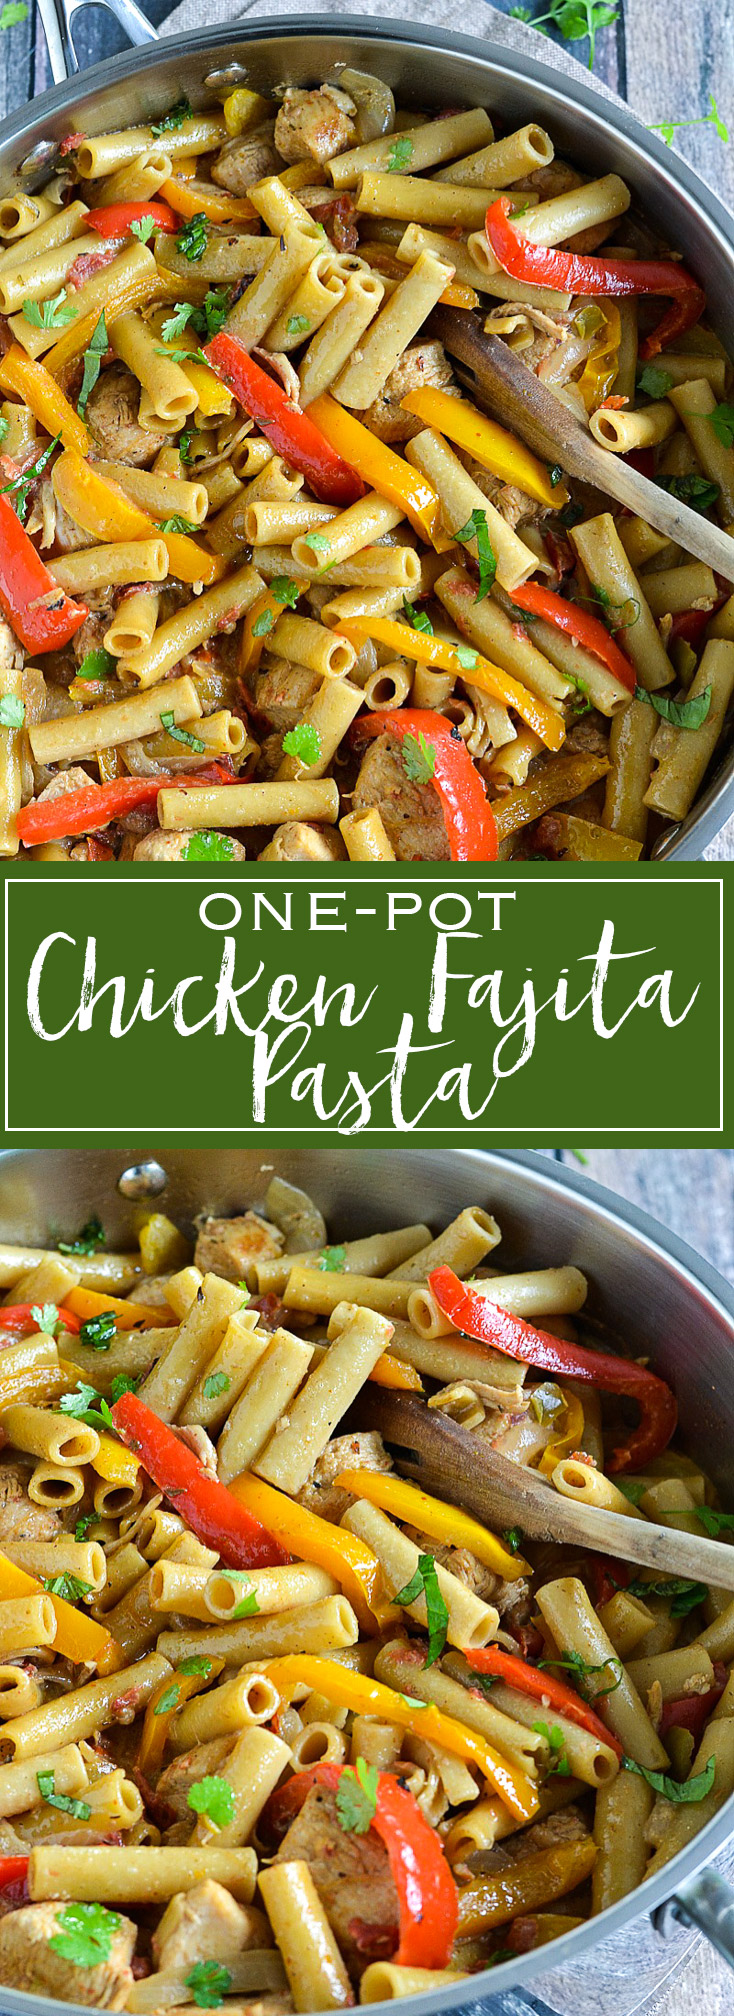 One-Pot Chicken Fajita Pasta | www.motherthyme.com